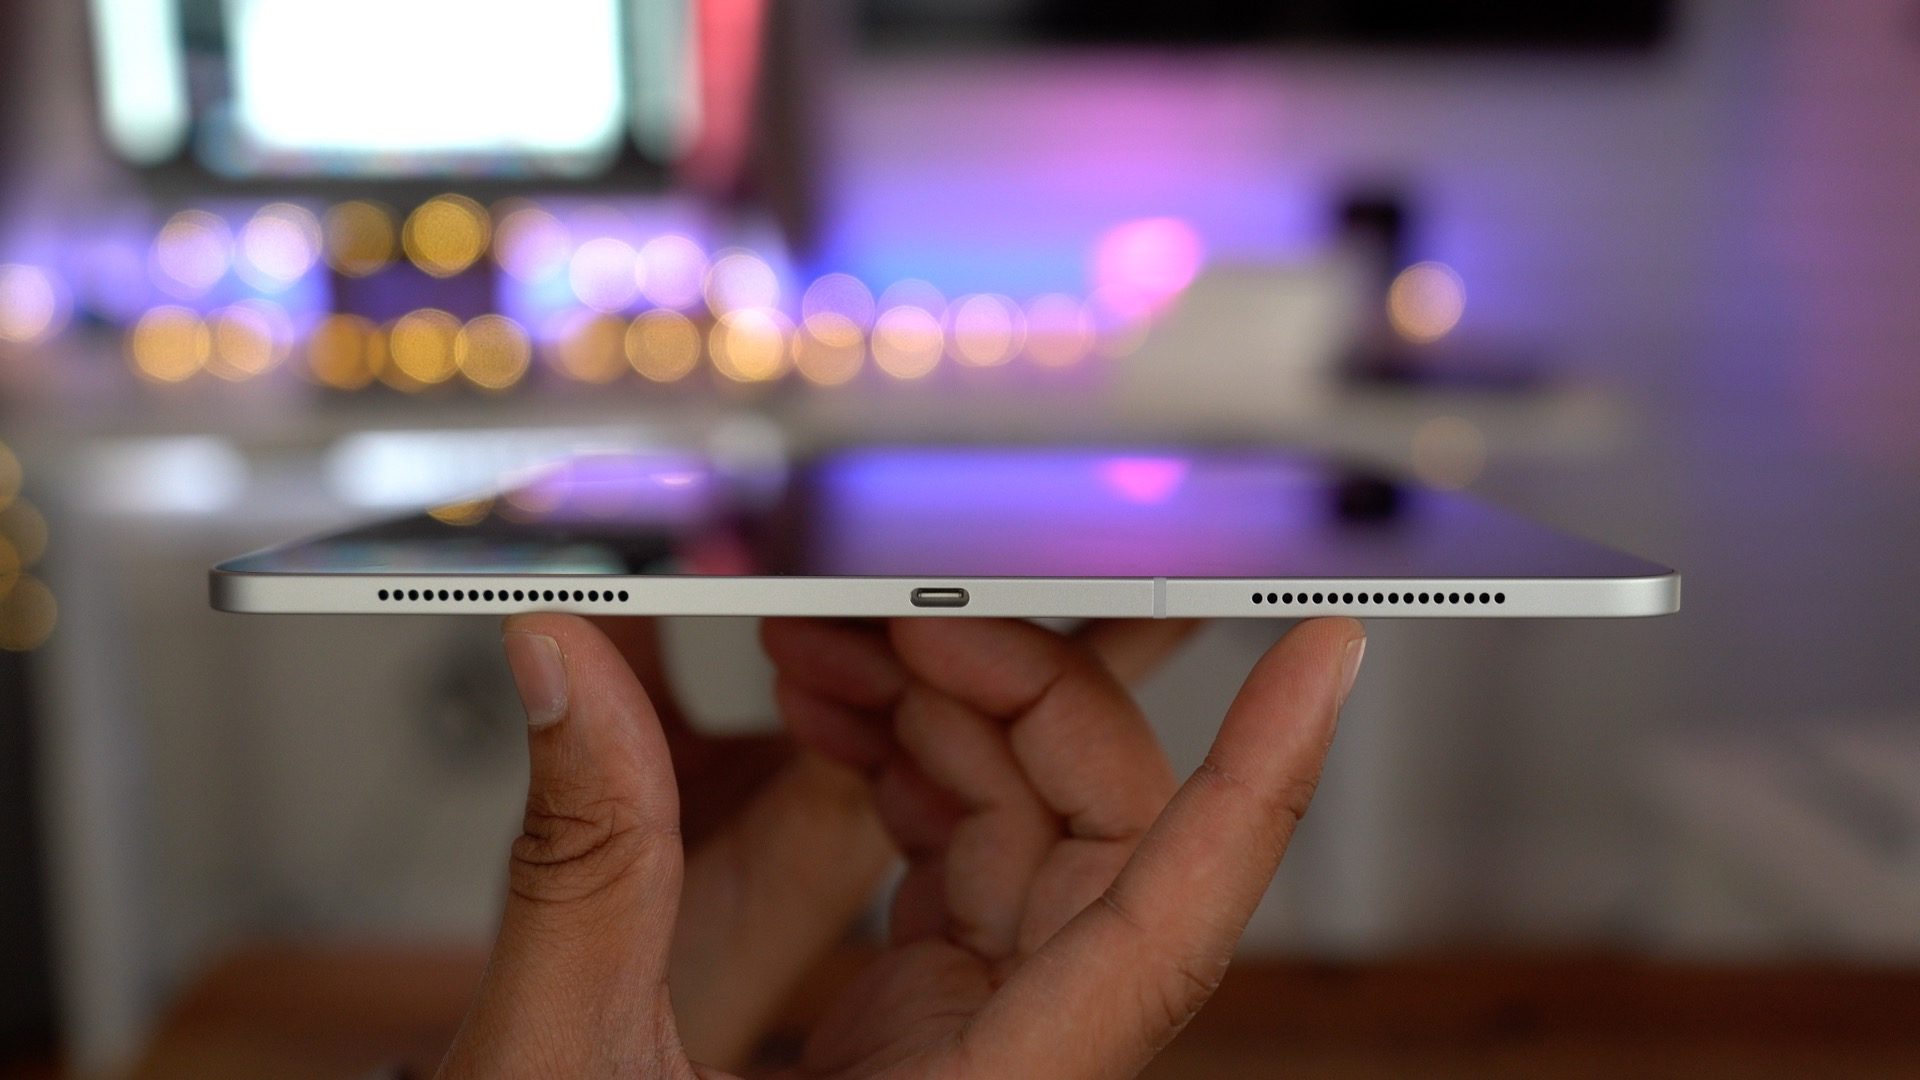 Apple responds to reports of bent iPad Pros